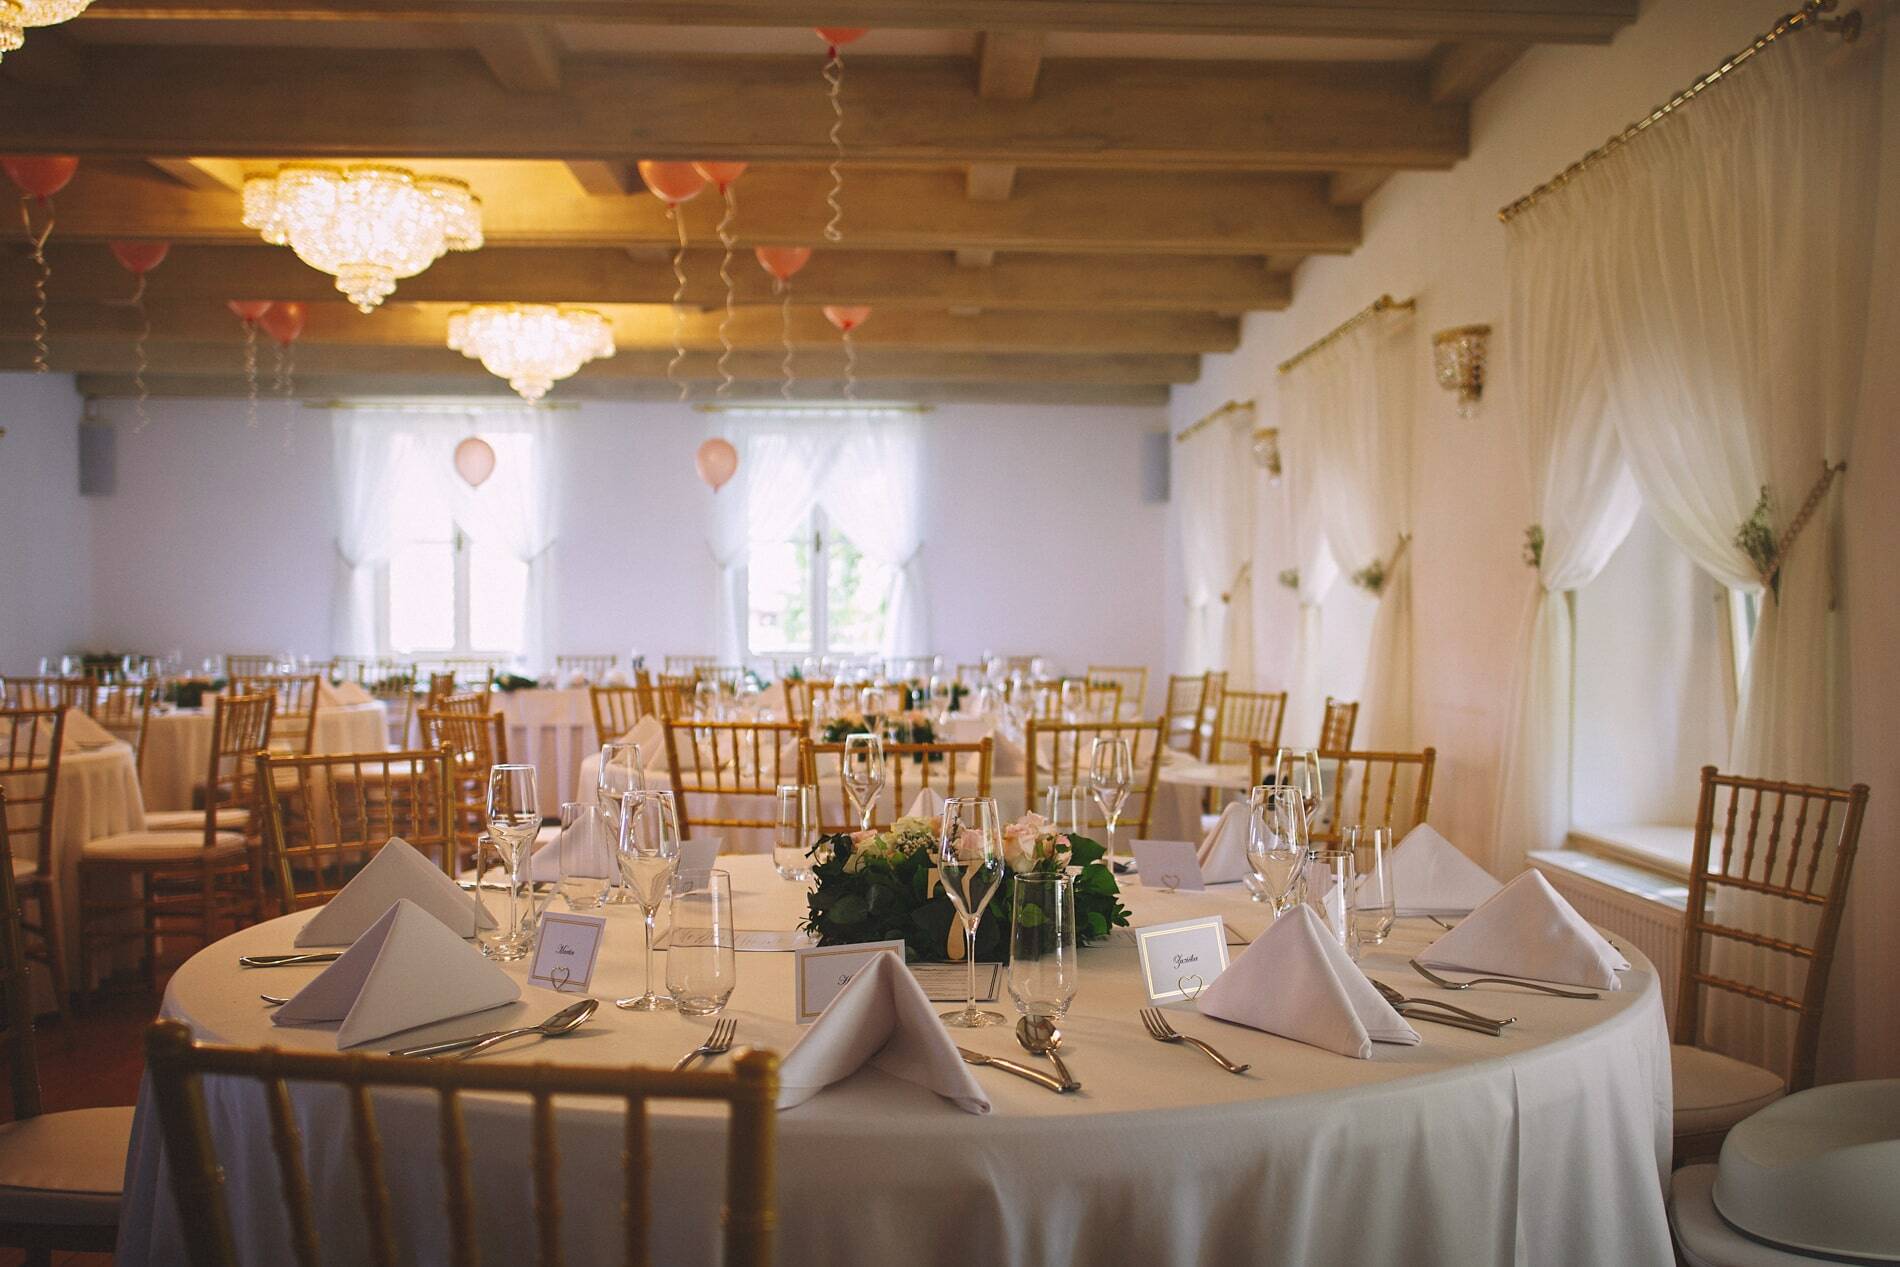 Wedding of Lenka and Ondra - Restaurant with wedding decoration - Wedding in Chateau Trnová near Prague